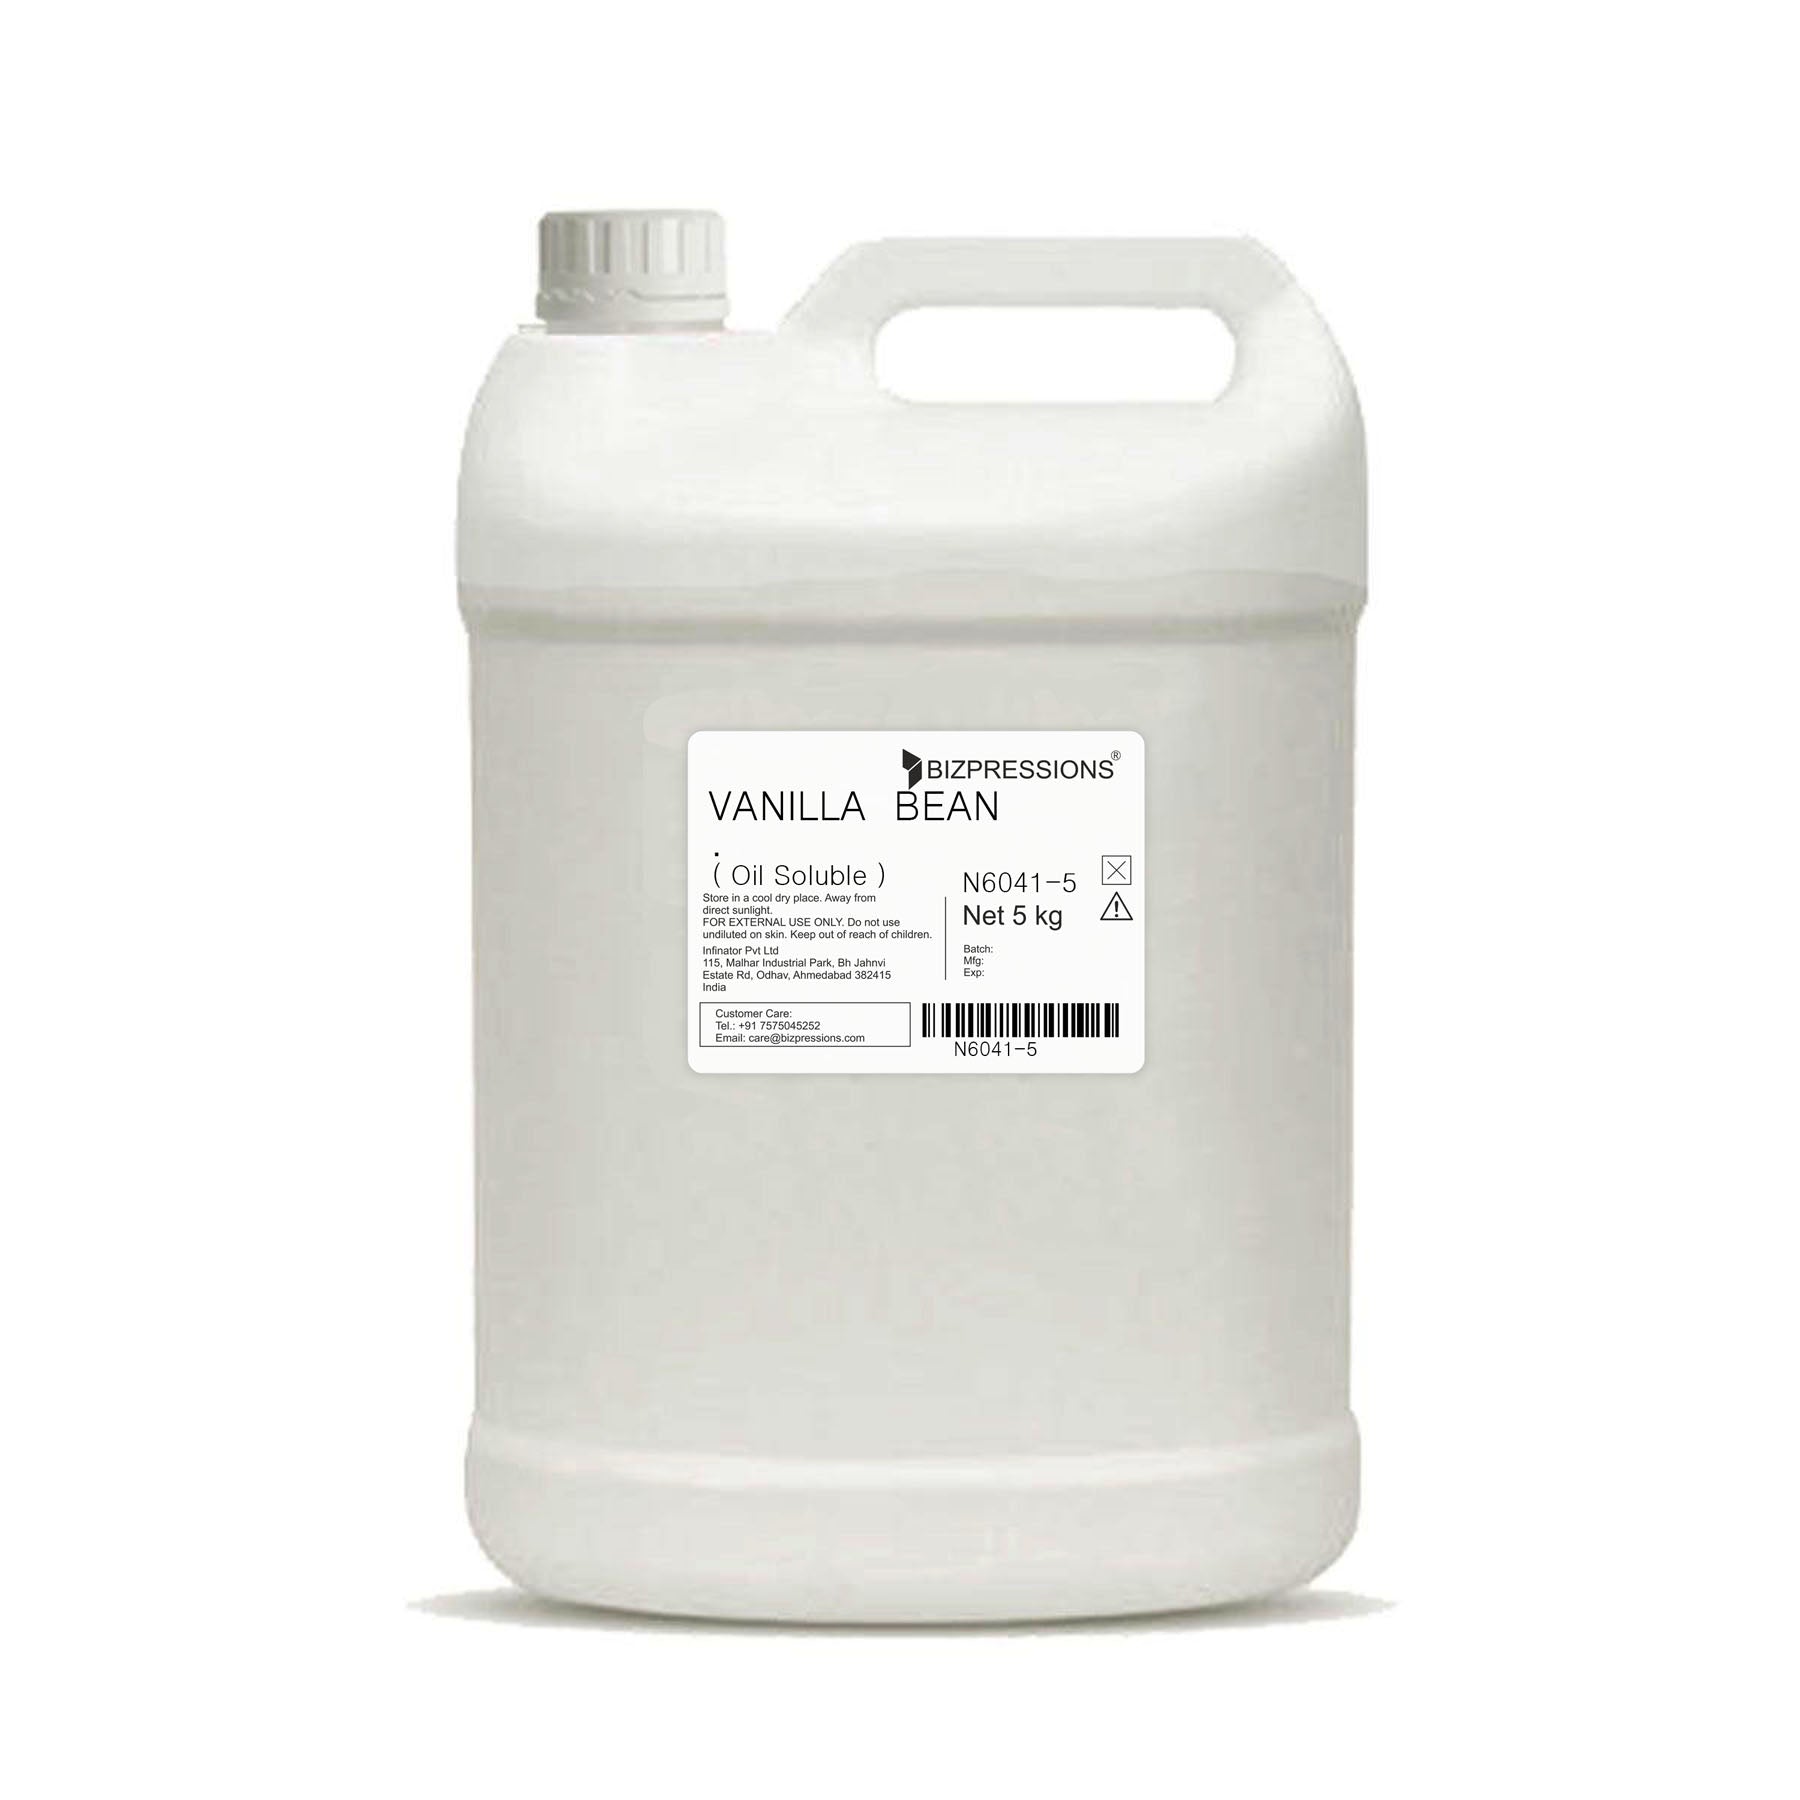 VANILLA BEAN - Fragrance ( Oil Soluble ) - 5 kg